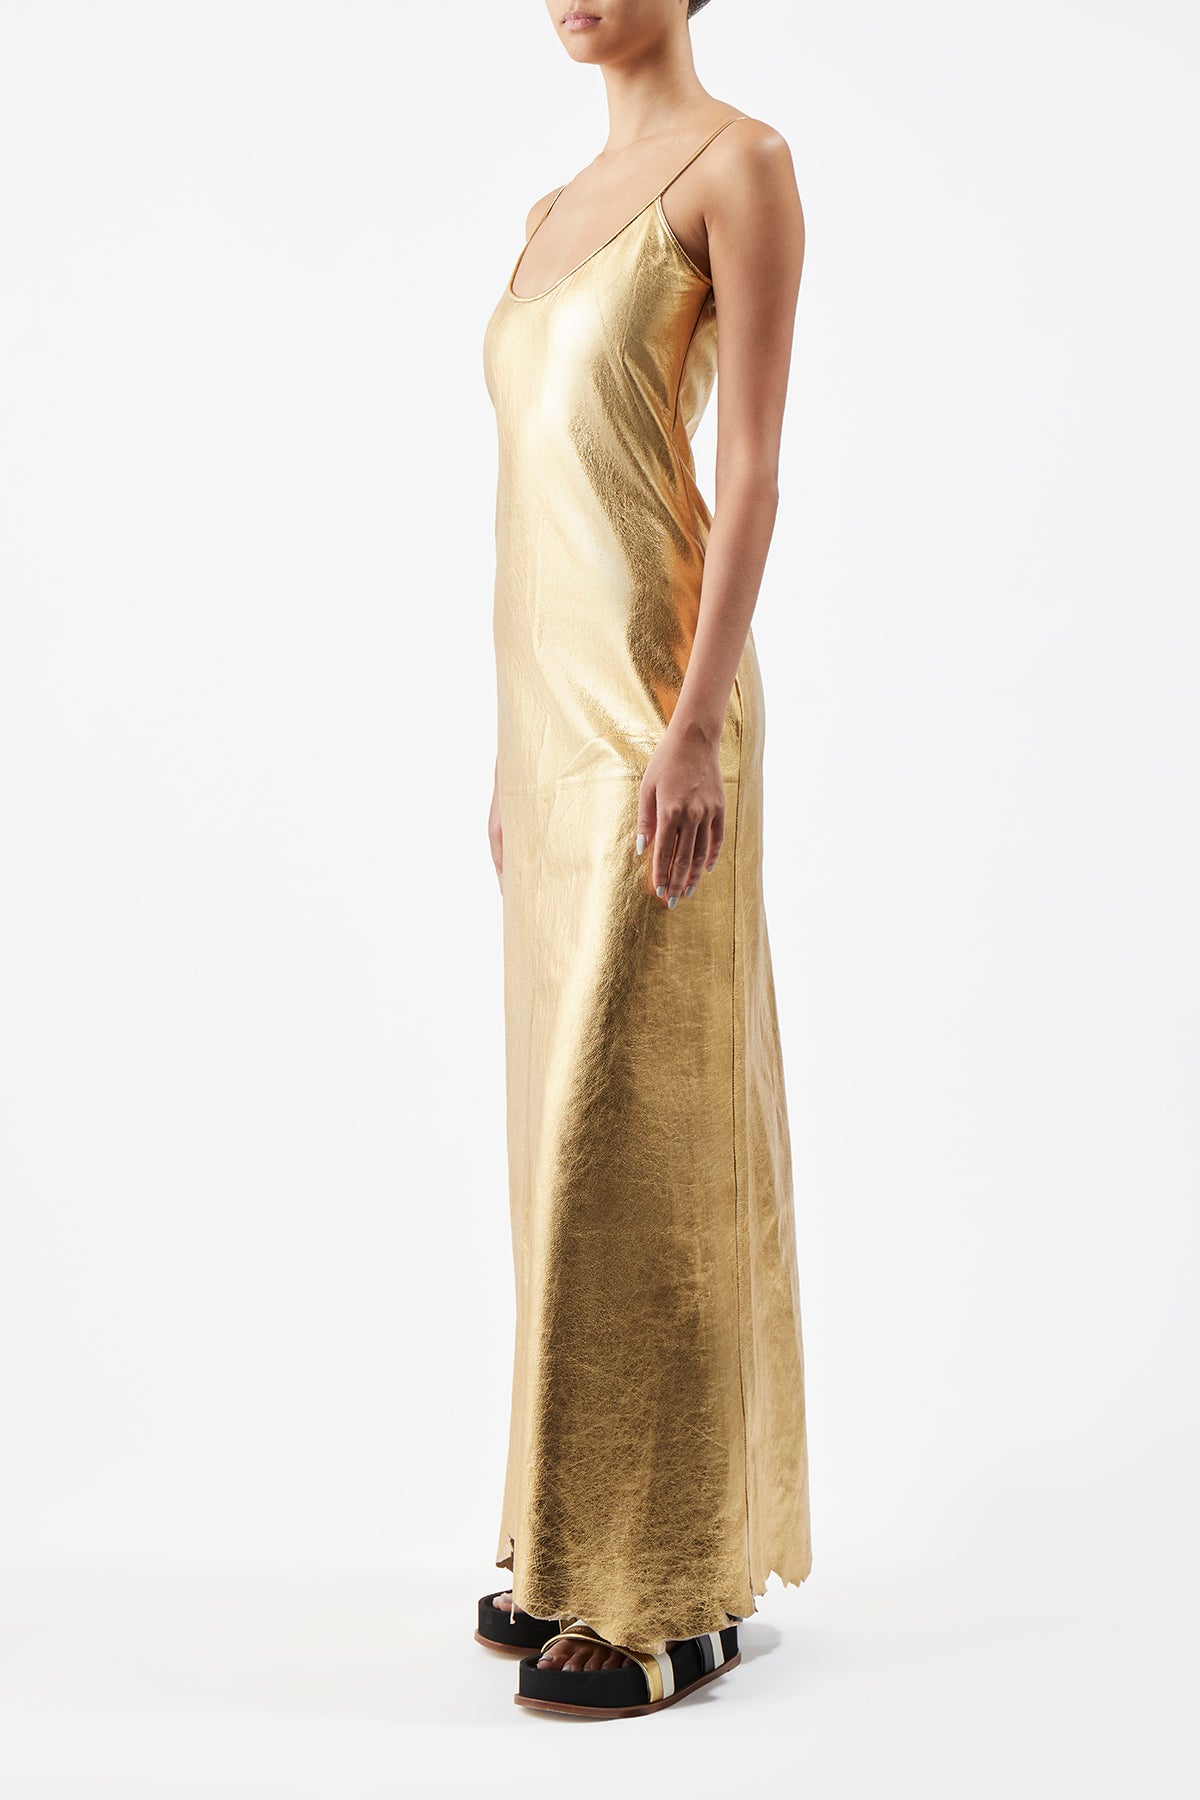 Teles Dress in Gold Metallic Nappa Leather